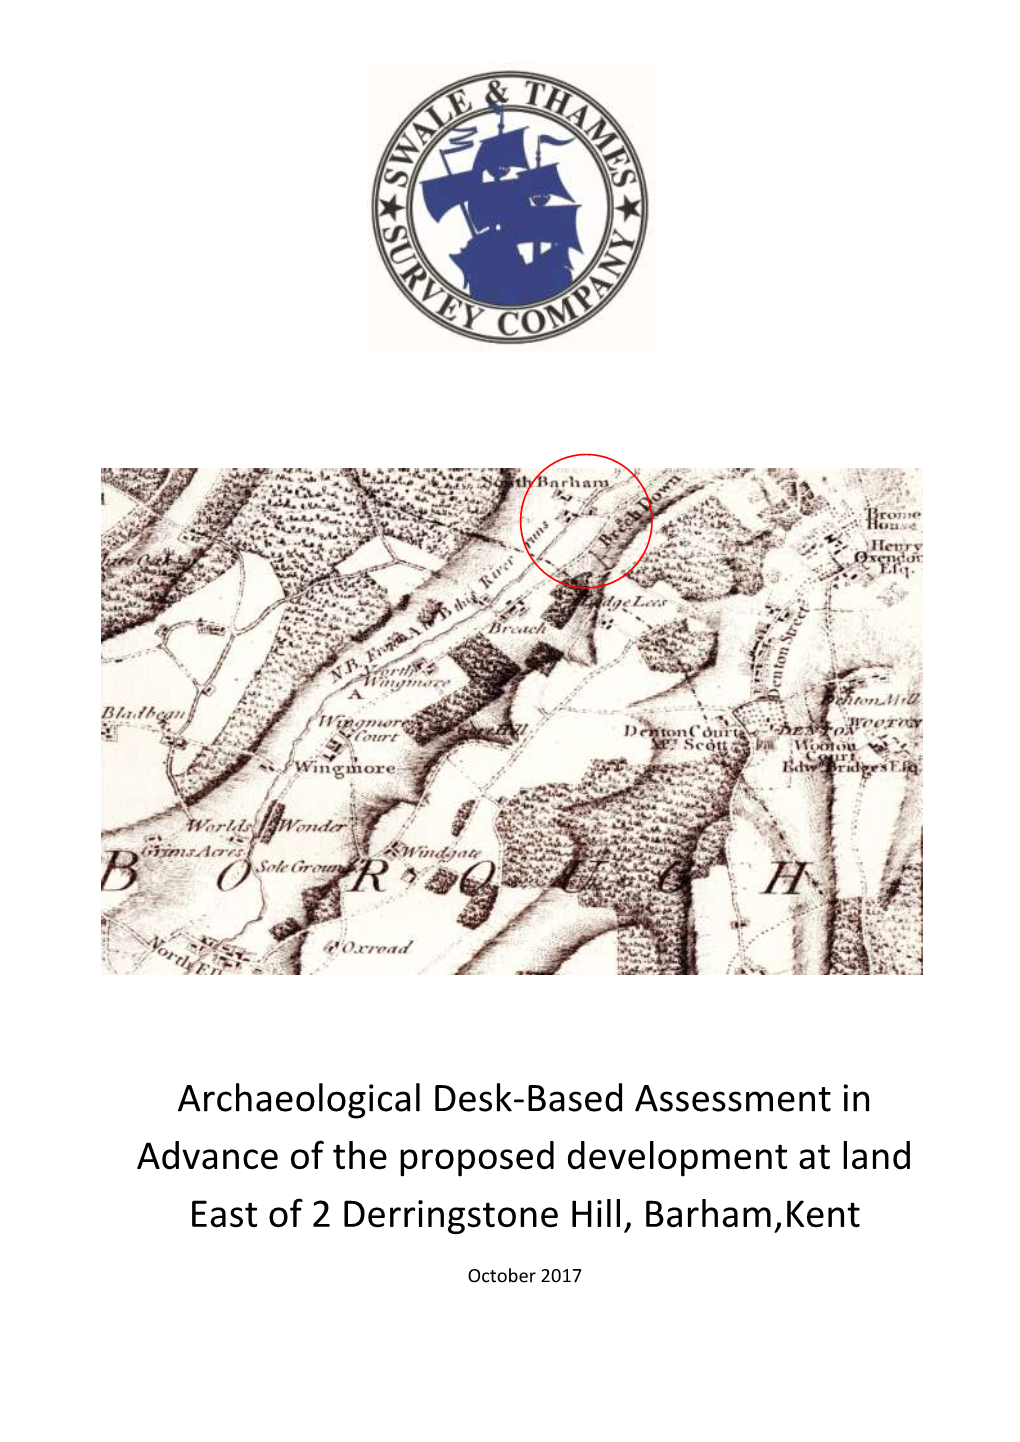 Archaeological Desk-Based Assessment in Advance of the Proposed Development at Land East of 2 Derringstone Hill, Barham,Kent October 2017